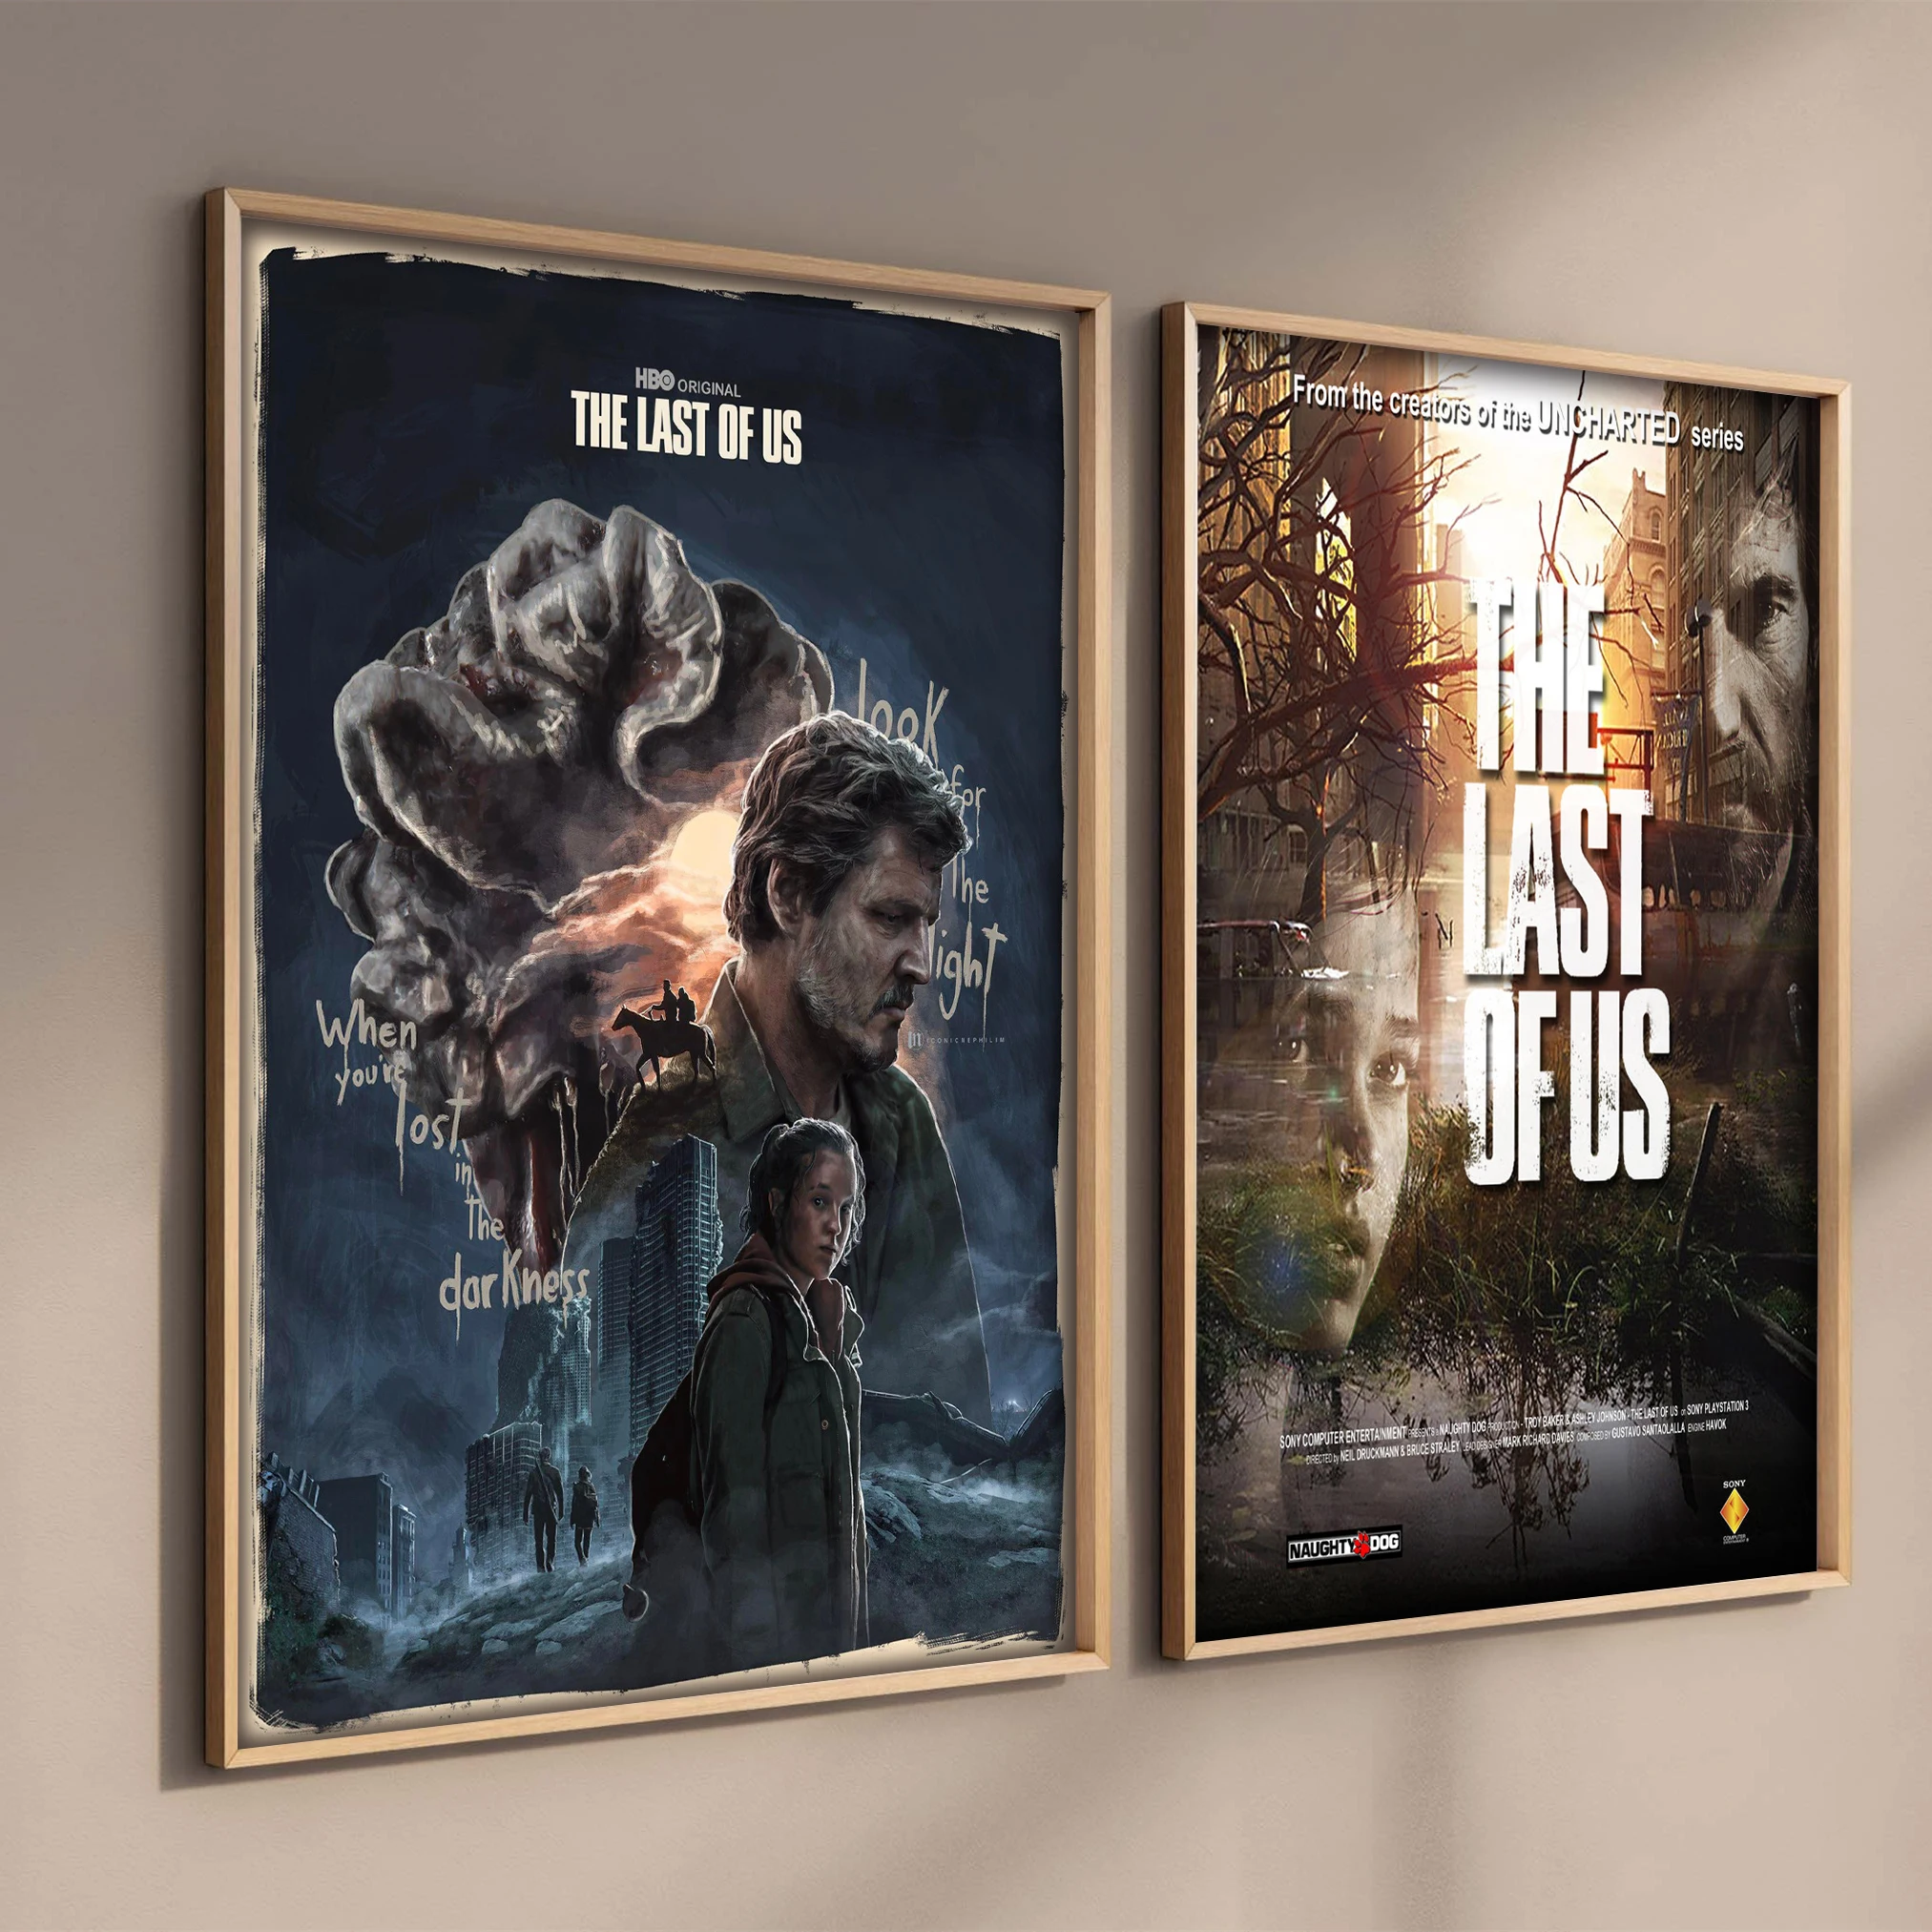 The Last of Us Season 1 Movie Poster wallpaper decor living room bar  decoration sticker wall painting - AliExpress